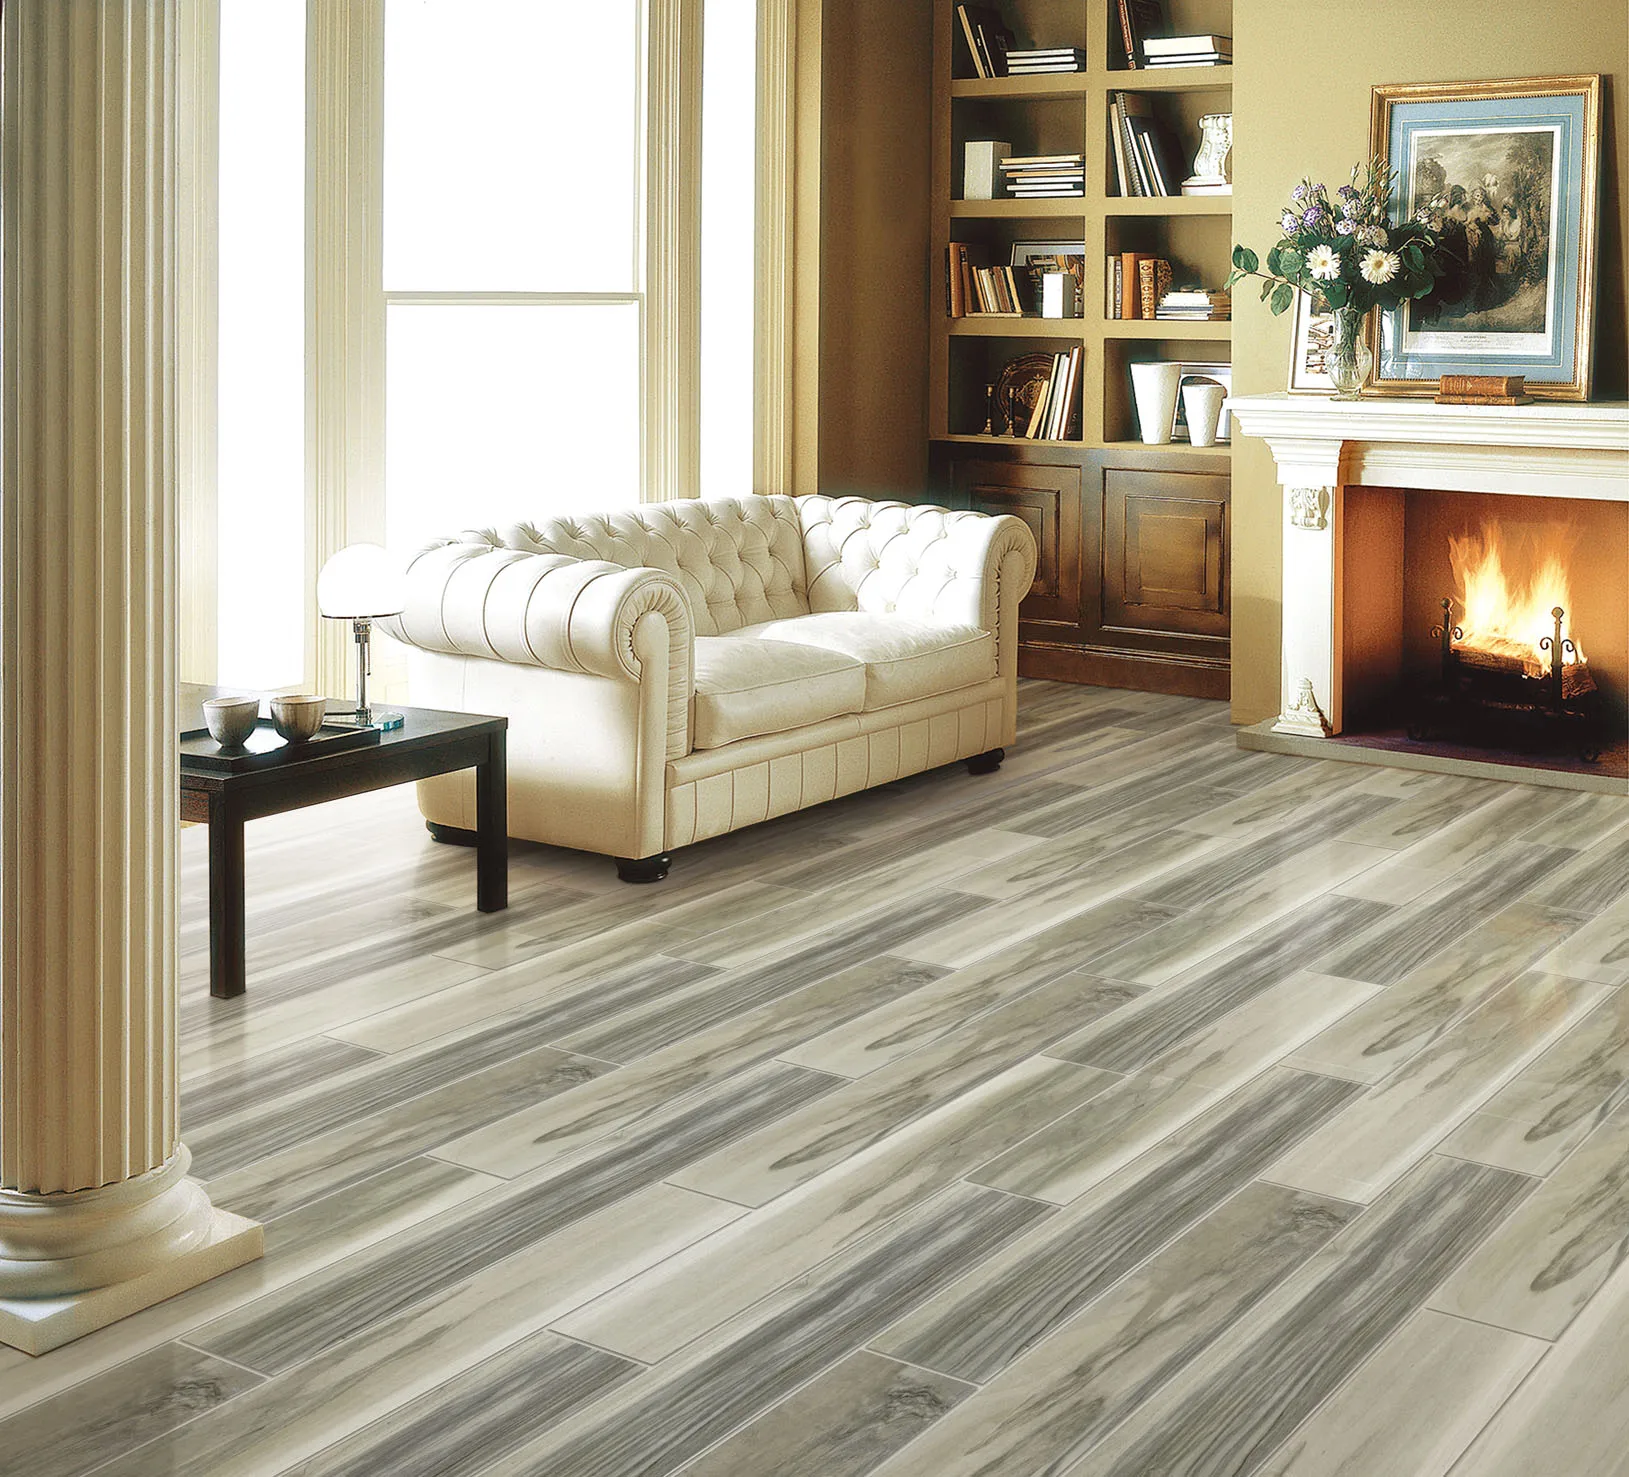 150 800 Rustic Style Look Wood Plank Porcelain Flooring Tile 150x800mm